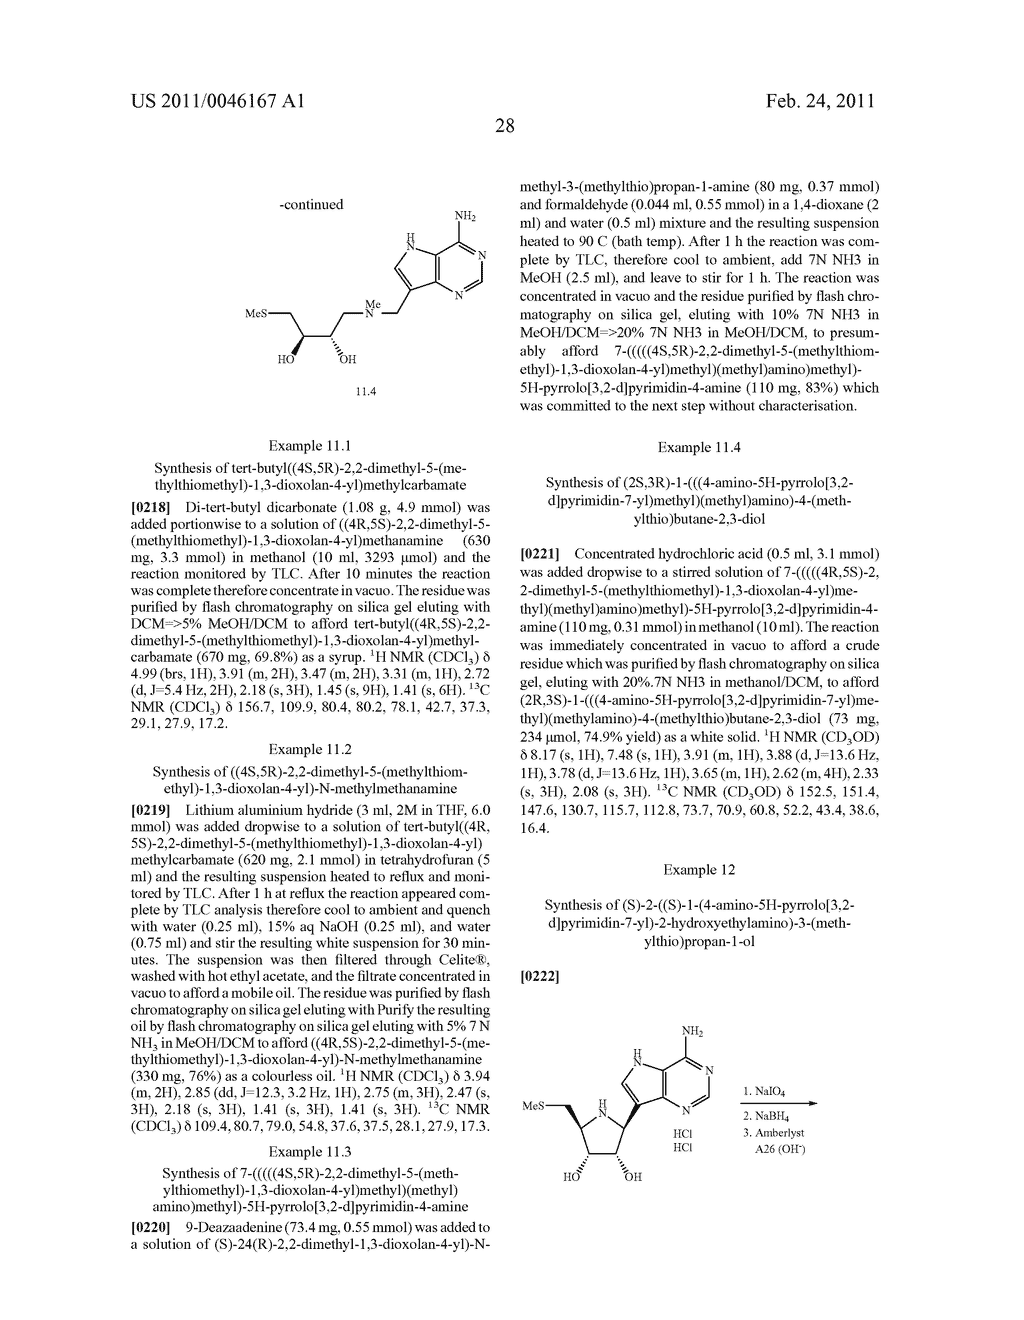 ACYCLIC AMINE INHIBITORS OF 5-METHYTIOADENOSINE PHOSPHORYLASE AND NUCLEOSIDASE - diagram, schematic, and image 29